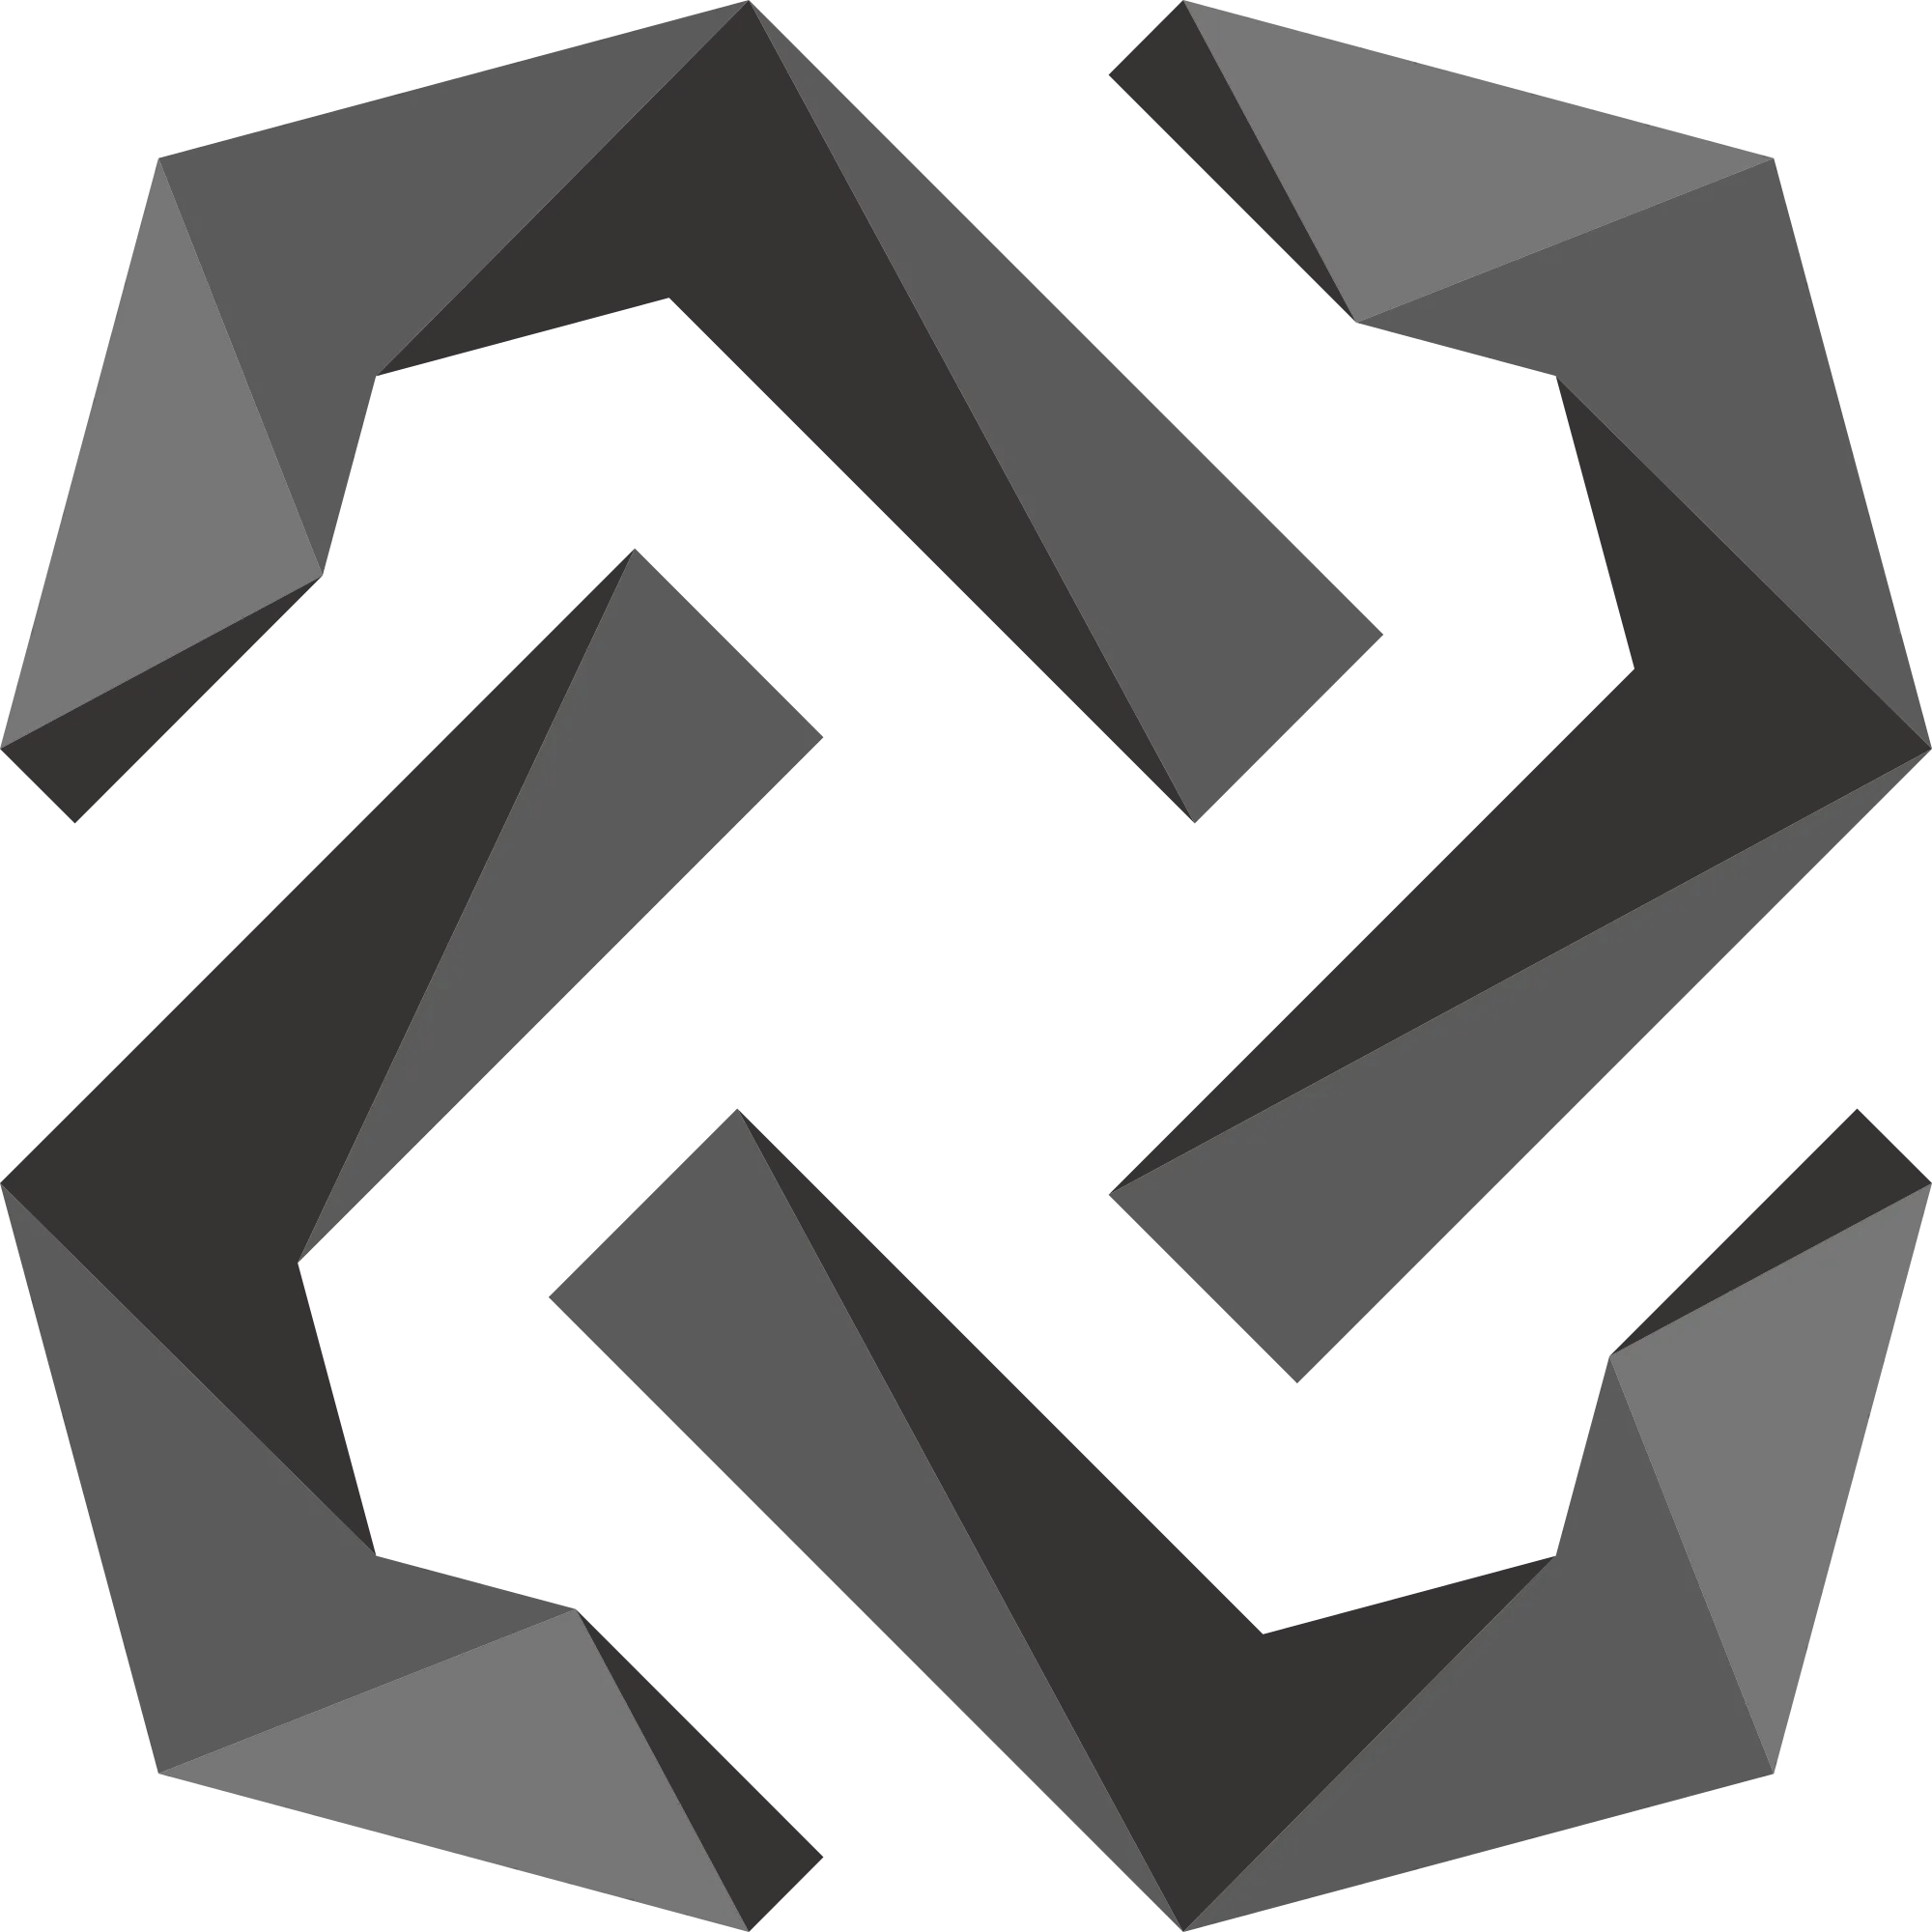 Bytom logo in png format